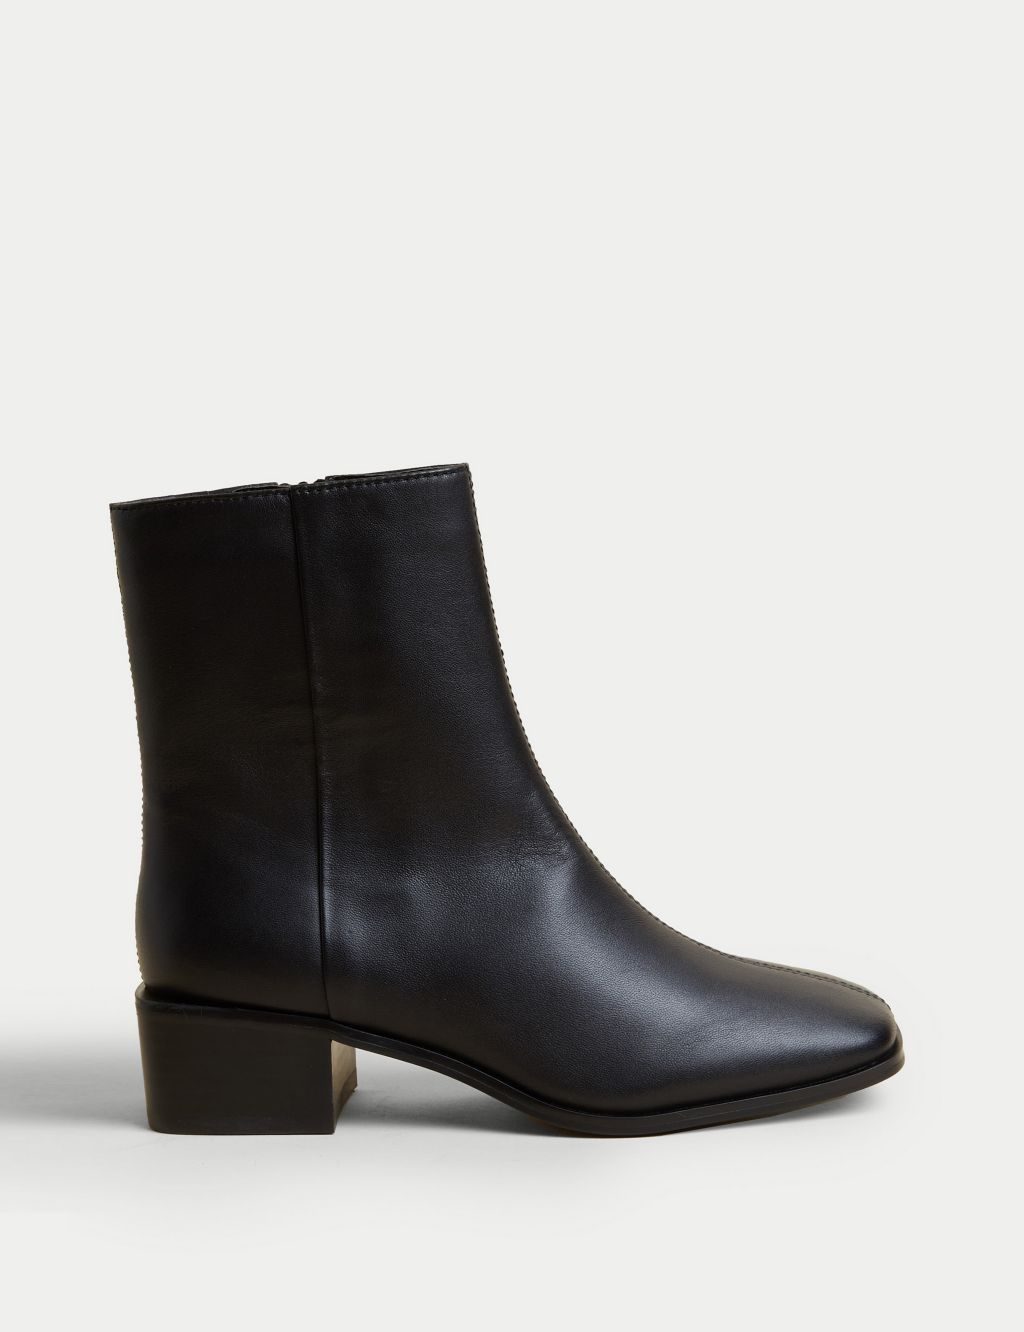 Autonomi brevpapir tyveri Leather Block Heel Square Toe Ankle Boots | M&S Collection | M&S